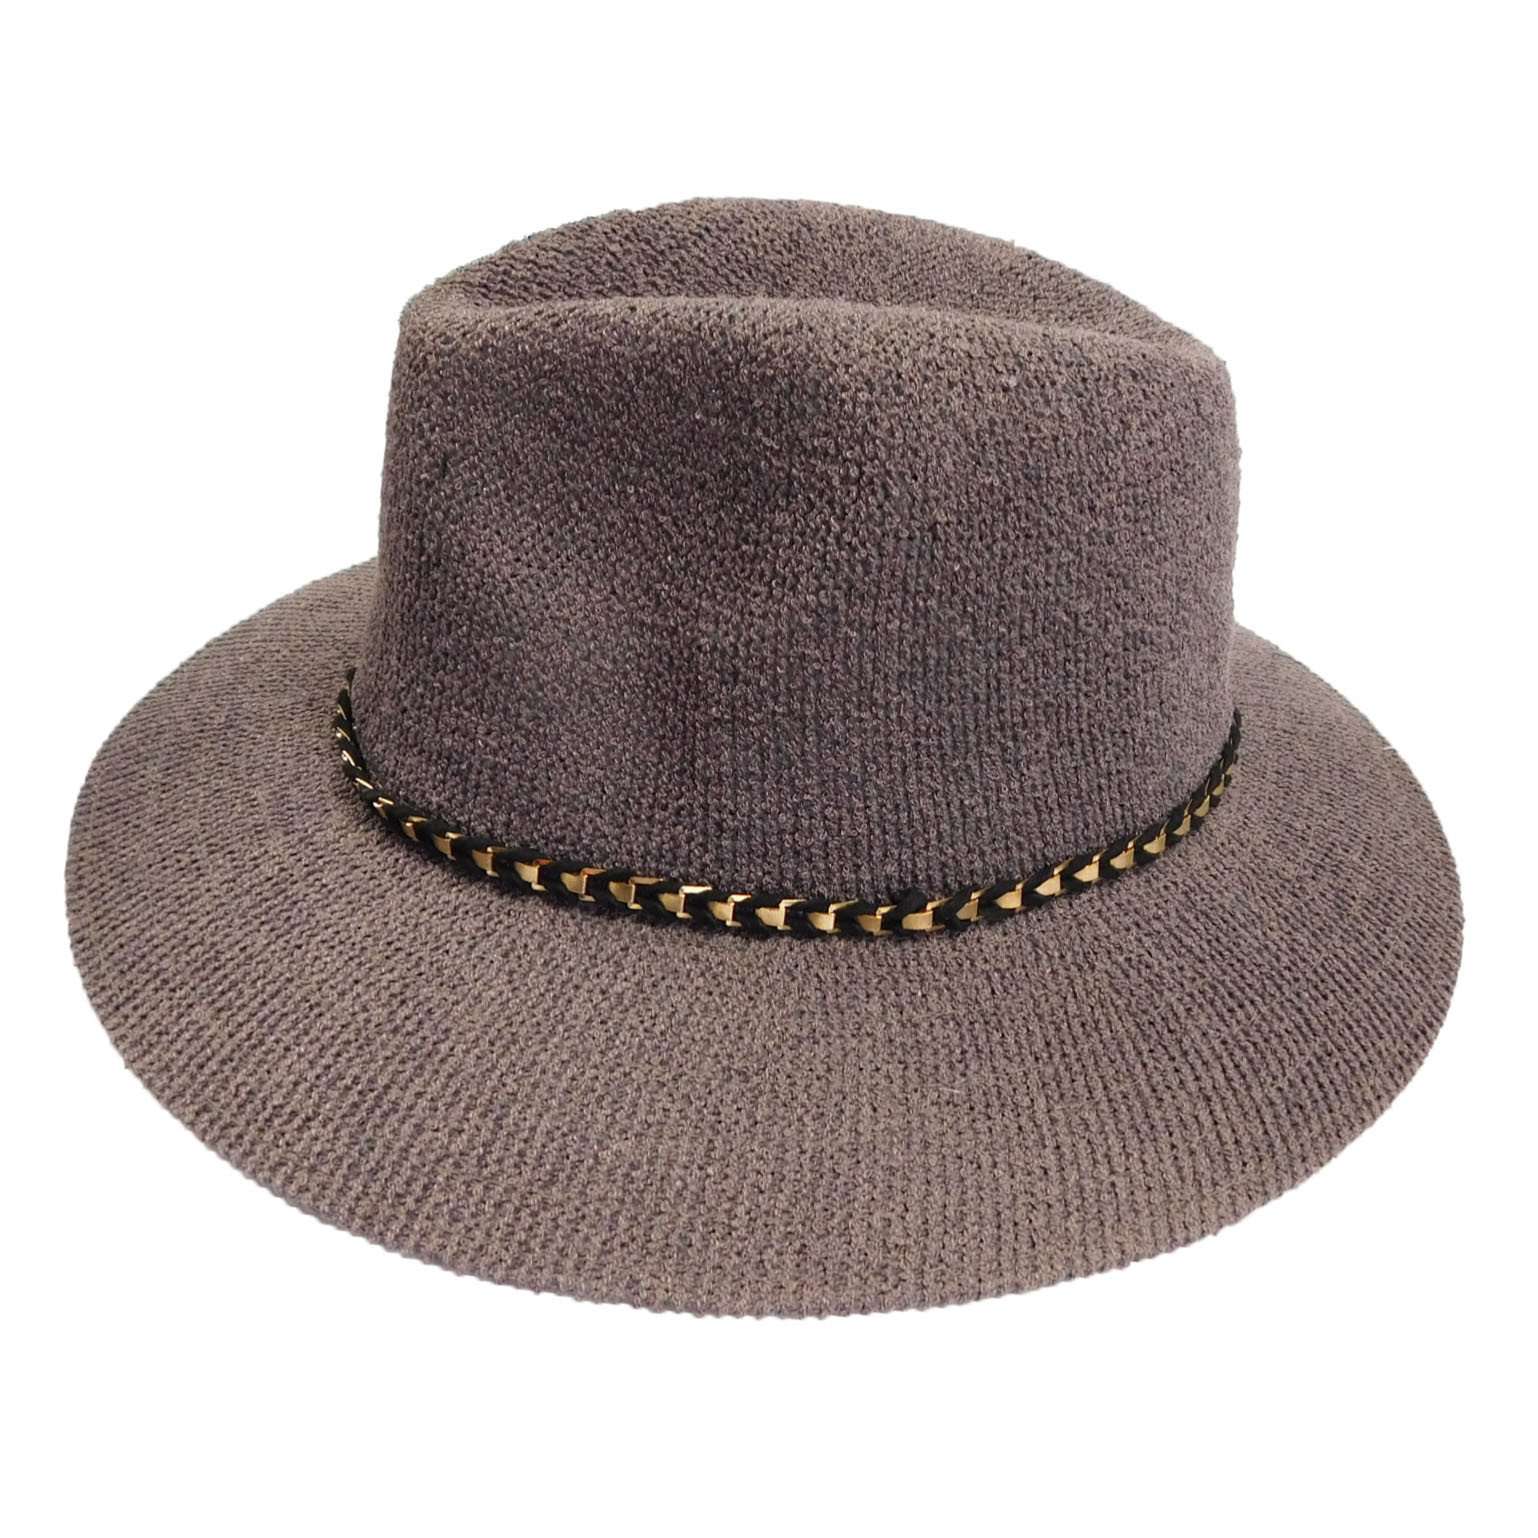 Knitted Panama Hat with Gold Band - Grey, Safari Hat - SetarTrading Hats 